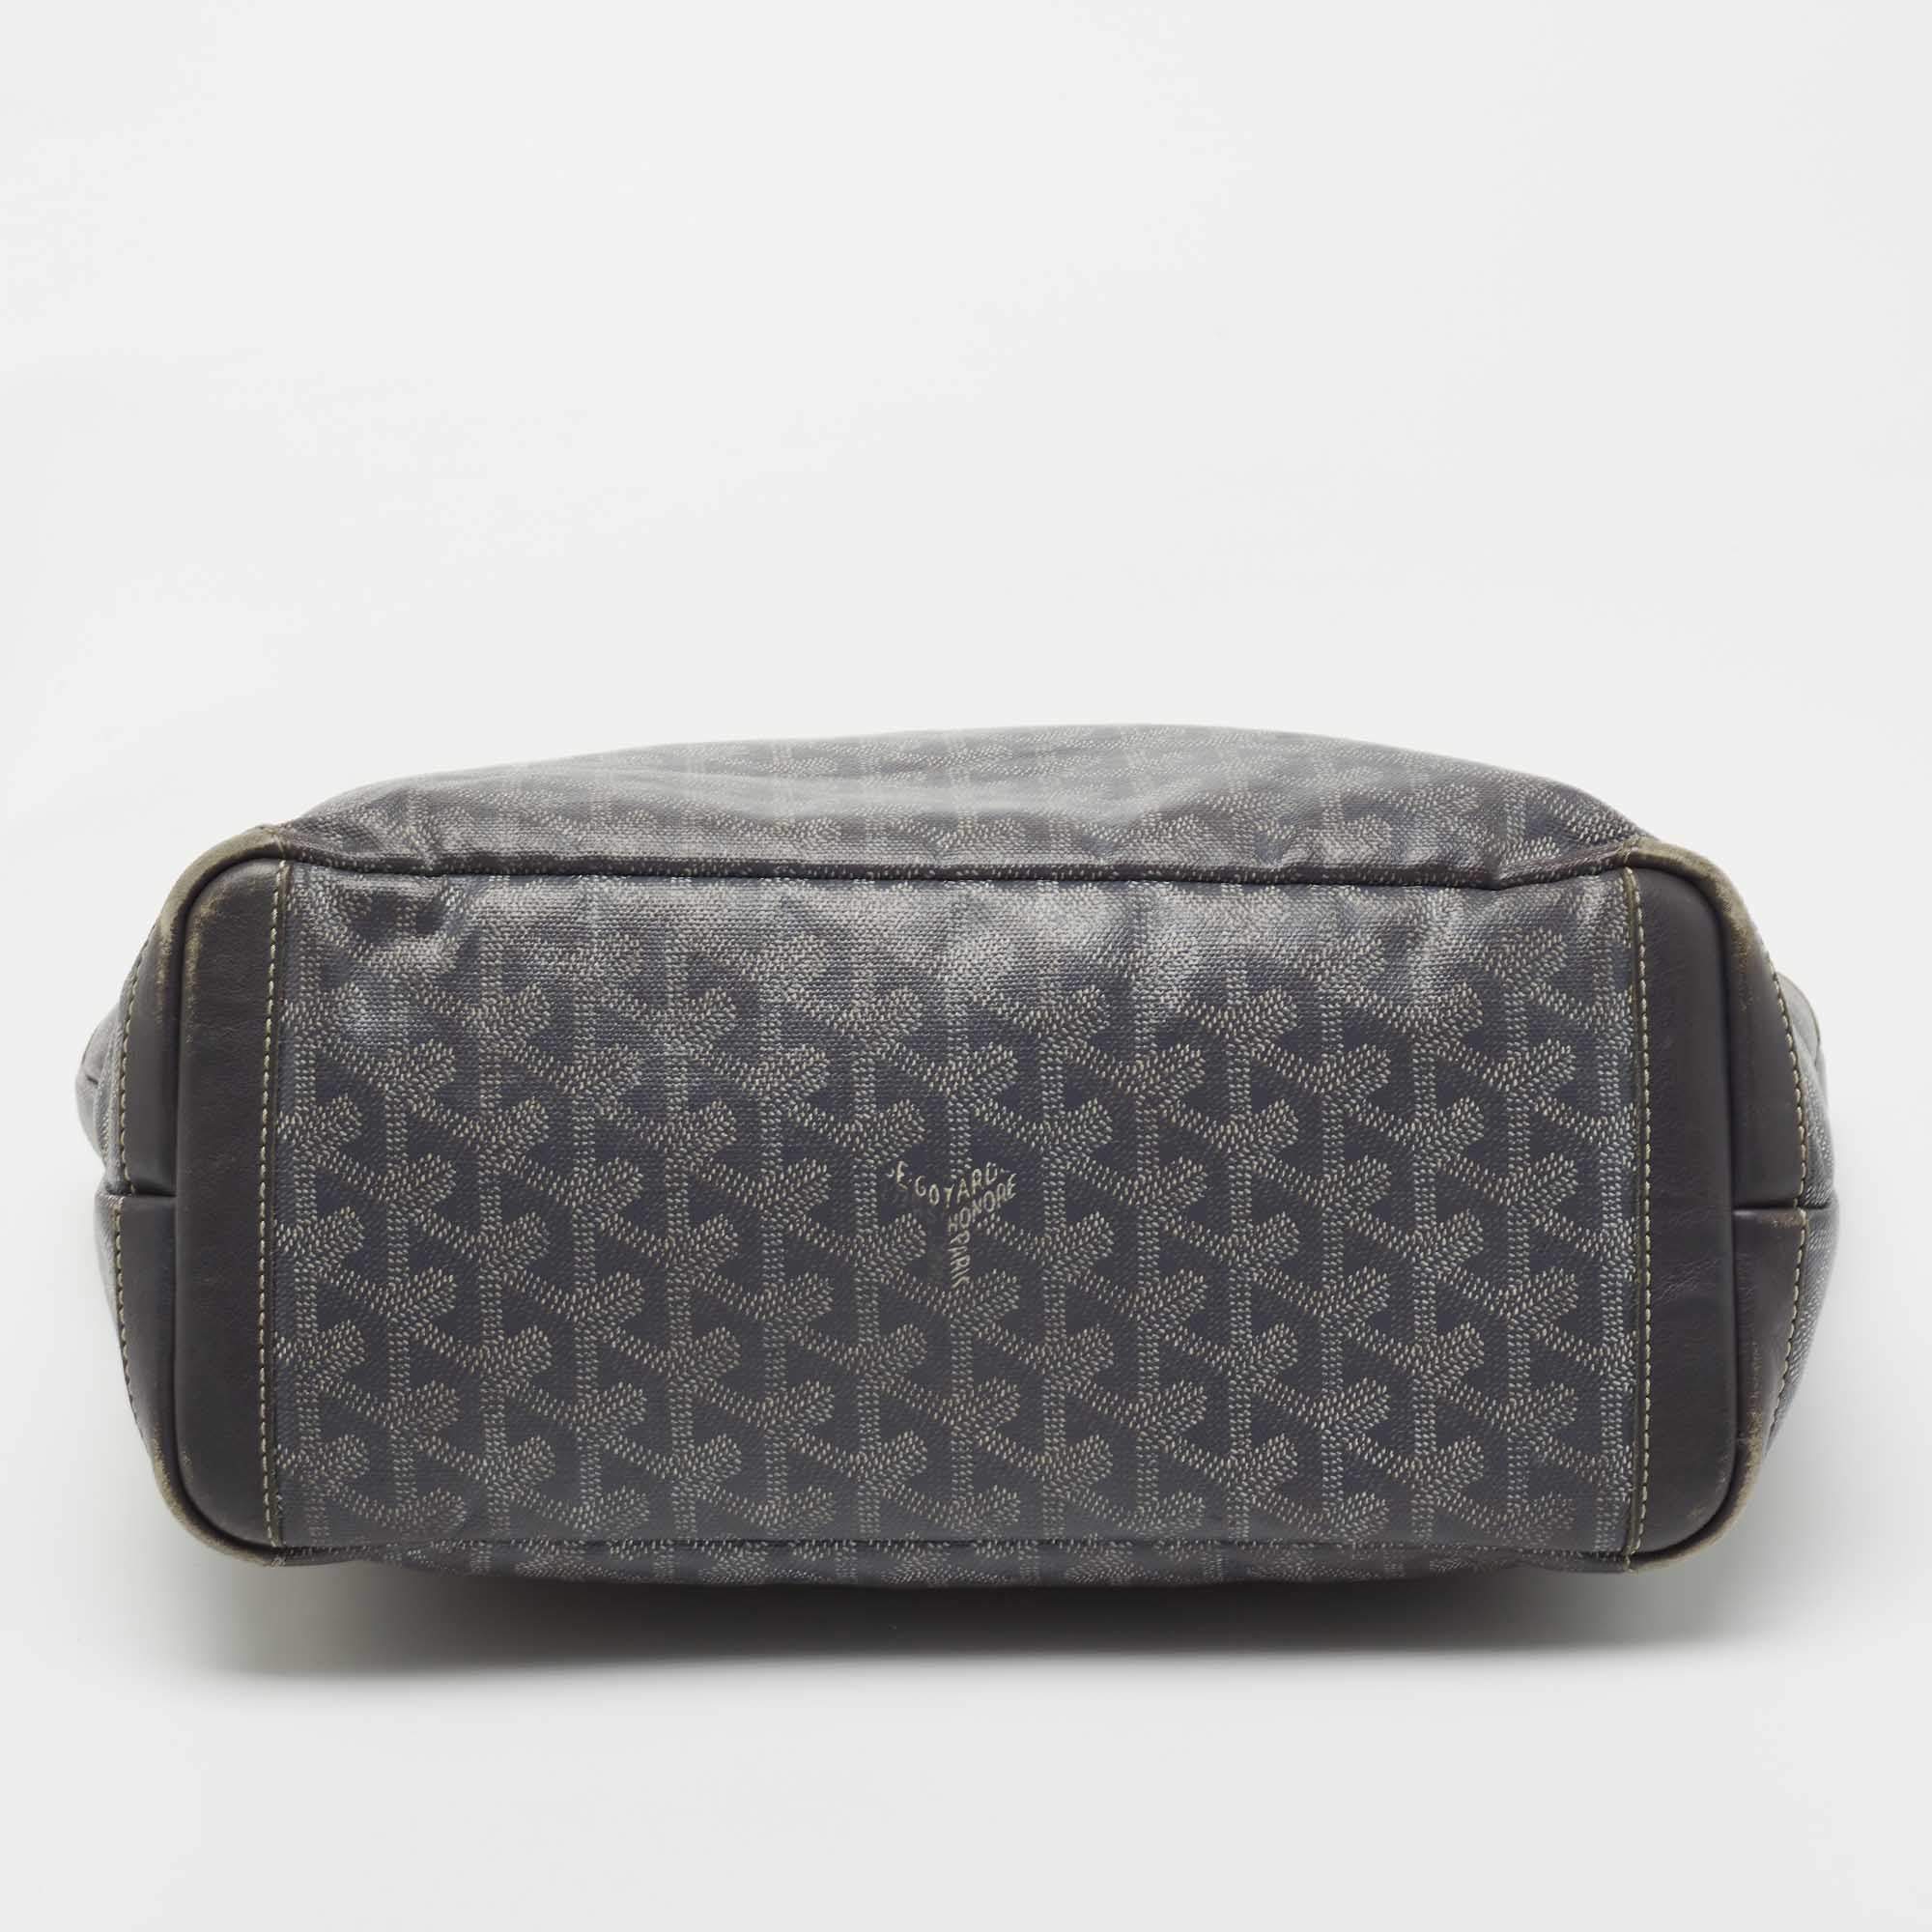 Goyard Goyard Artois PM - Grey Totes, Handbags - GOY35564